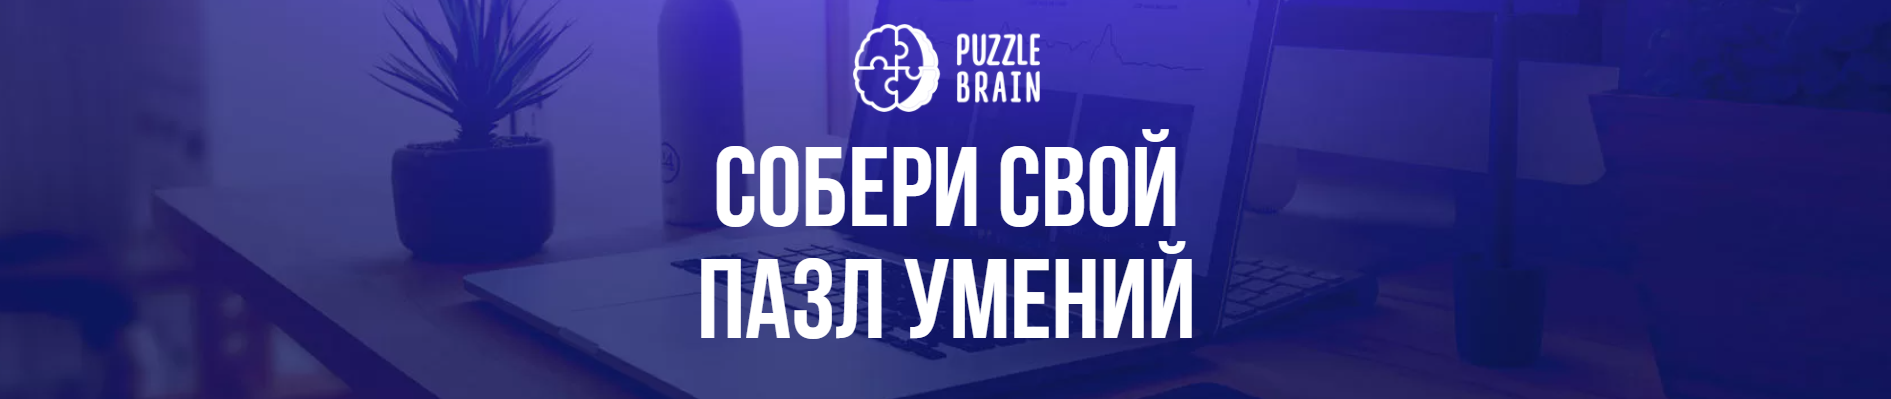 puzzlebrain.png